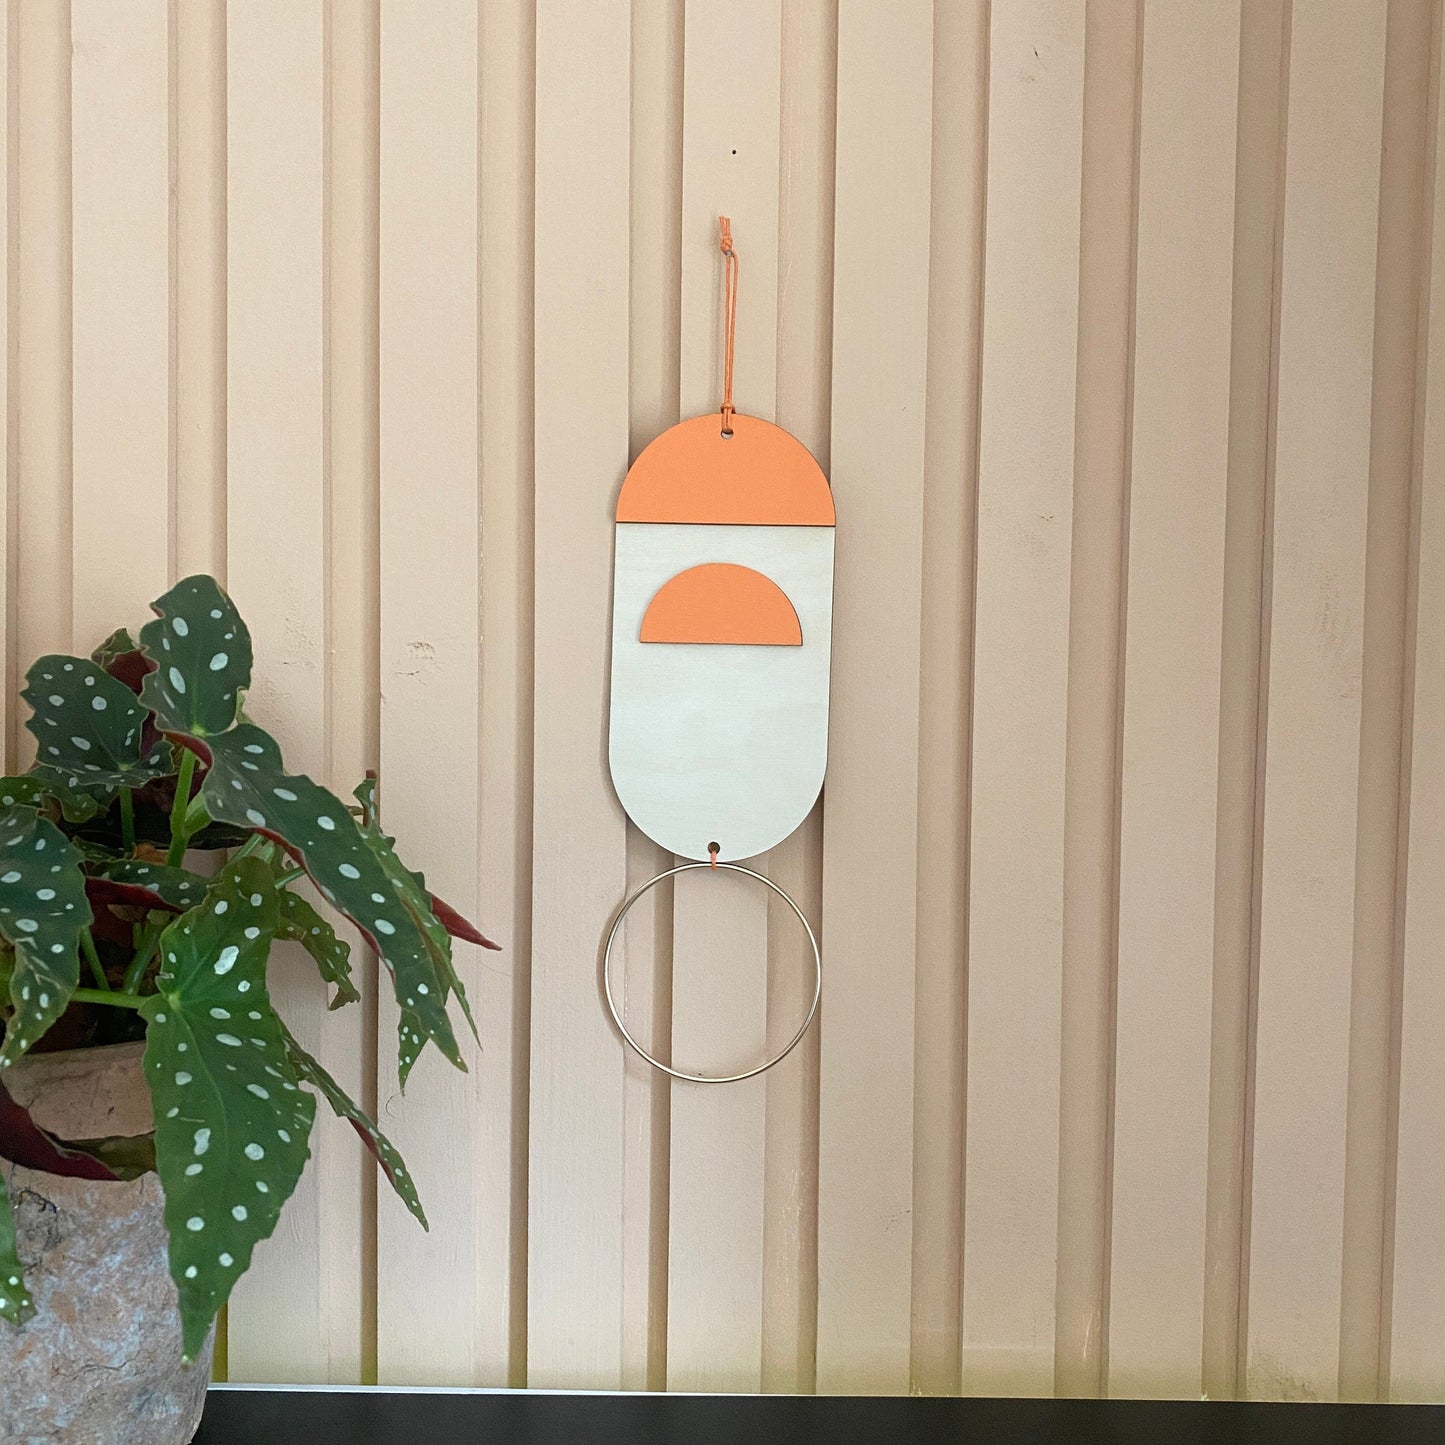 Minimalistic Mono Bright Art - Contemporary Art - Orange Wall Hanging - Modern Simple Decor - Unique Home Decor - Small Wall Hanging - Plain